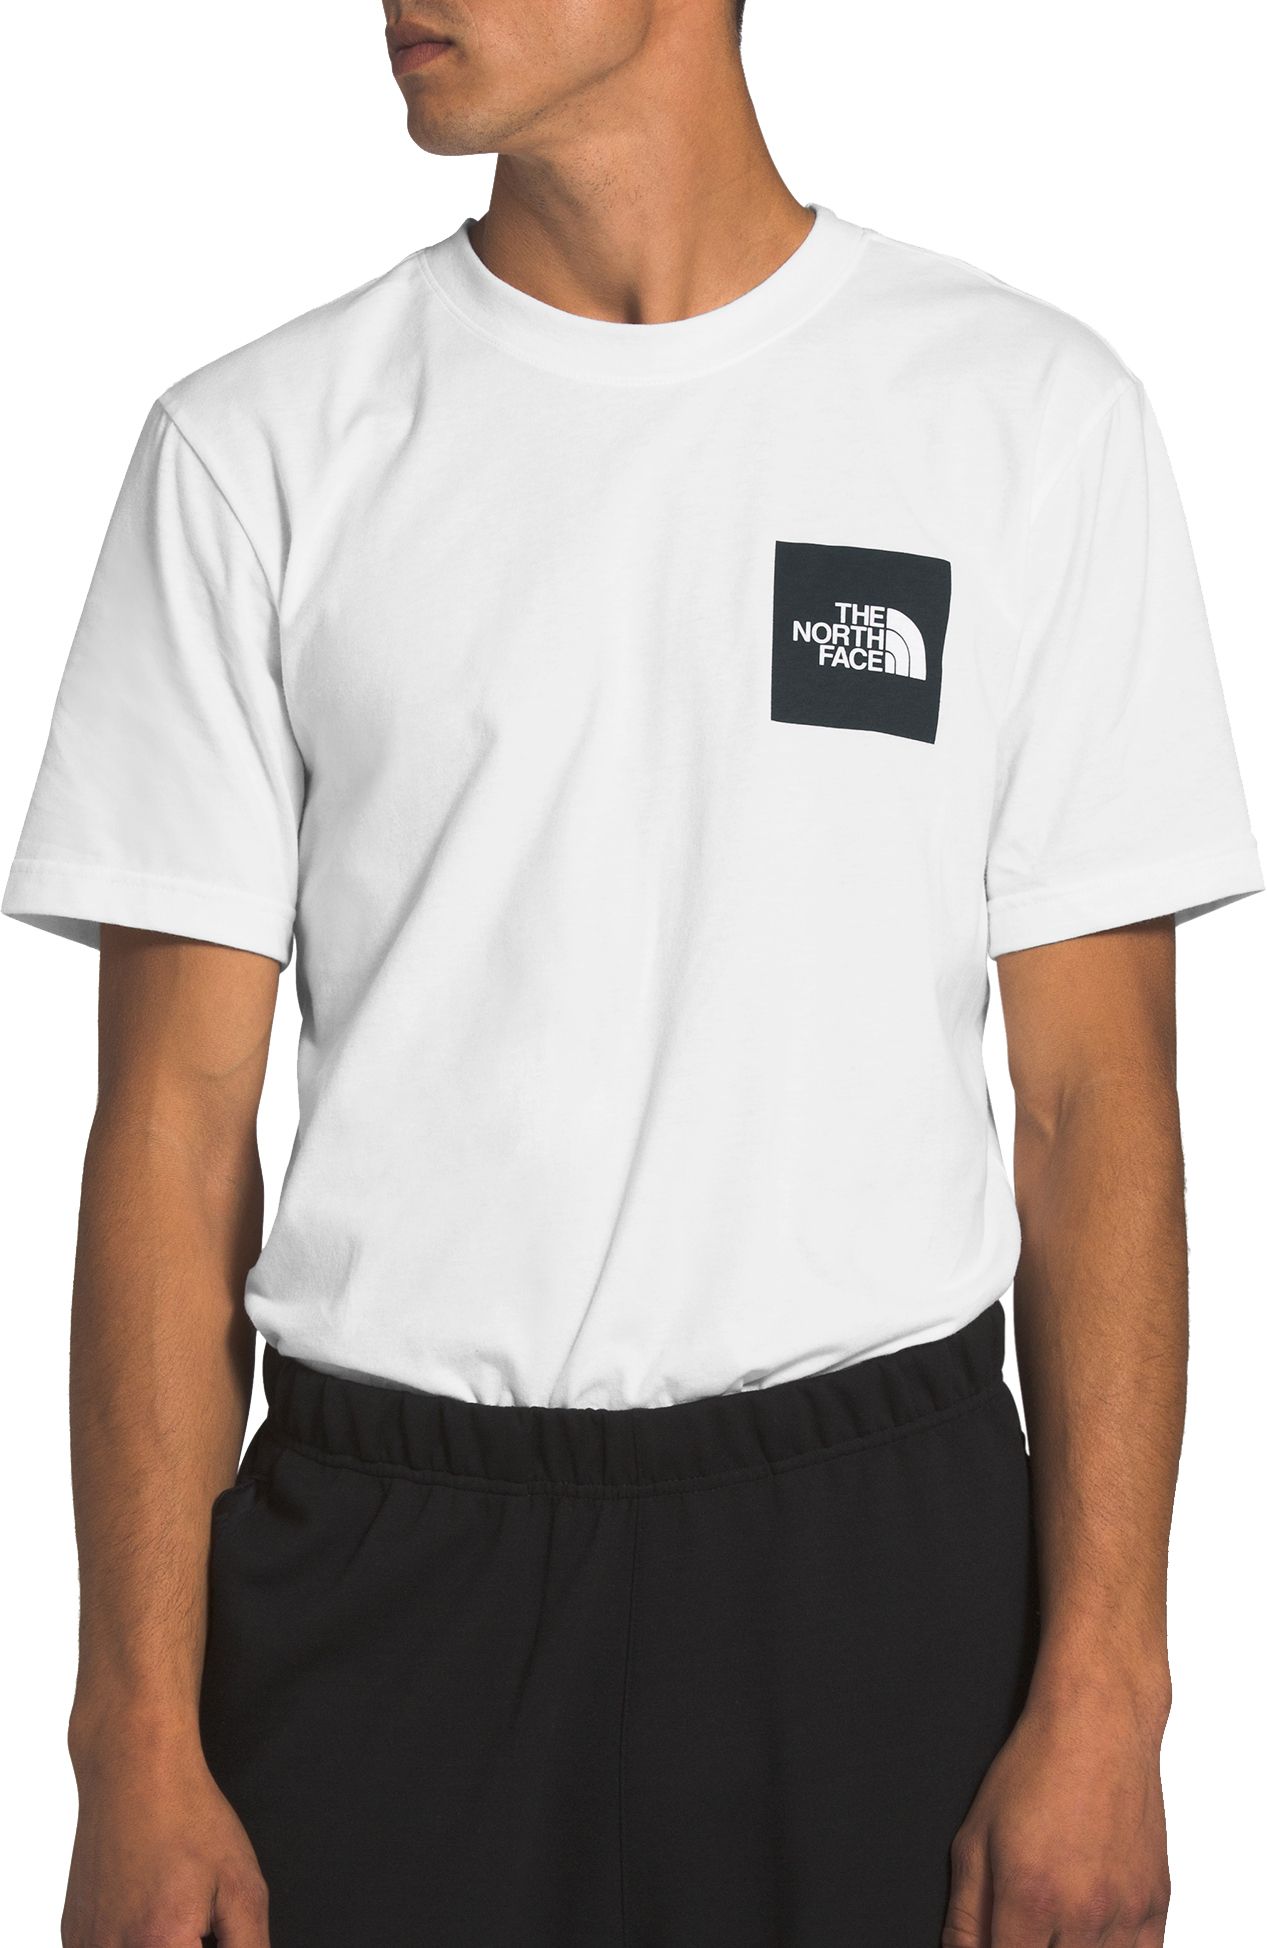 North Face Shirts Clearance, 59% OFF | www.ingeniovirtual.com